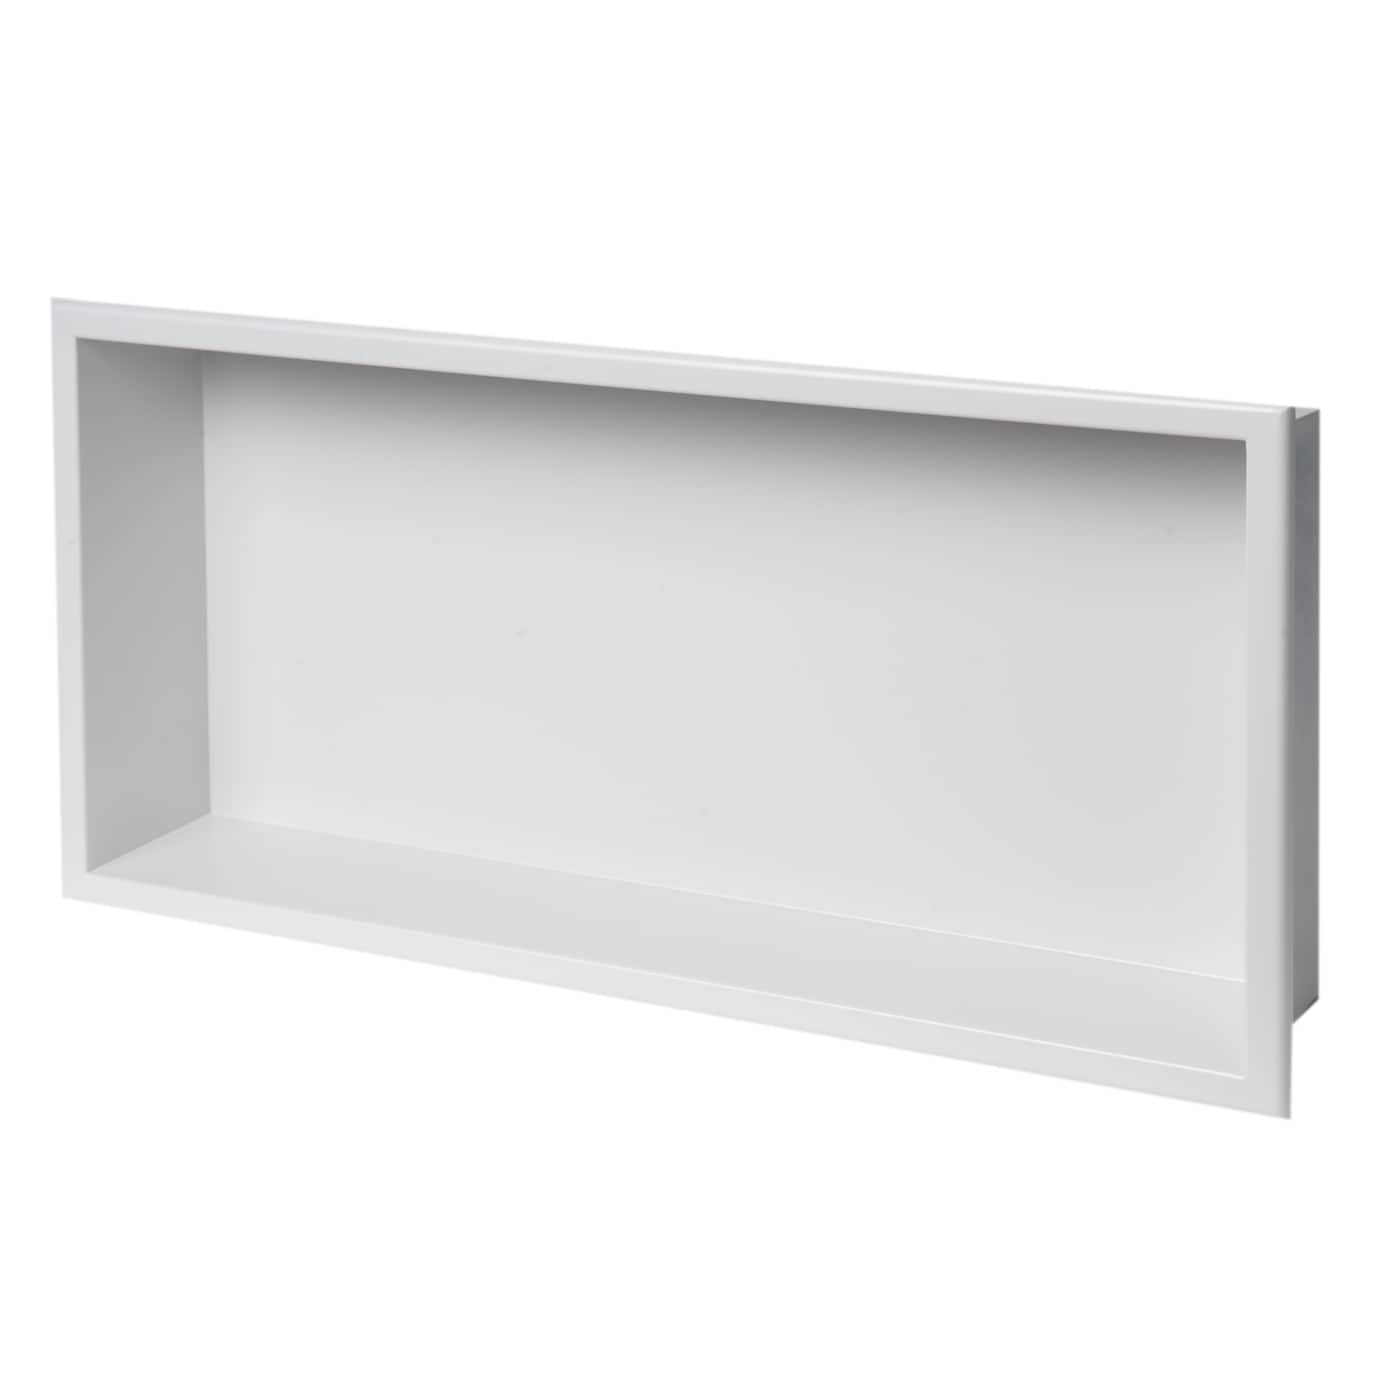 ALFI brand 24 x 12 White Matte Stainless Steel Horizontal Single Shelf -  Luxury Bath Collection